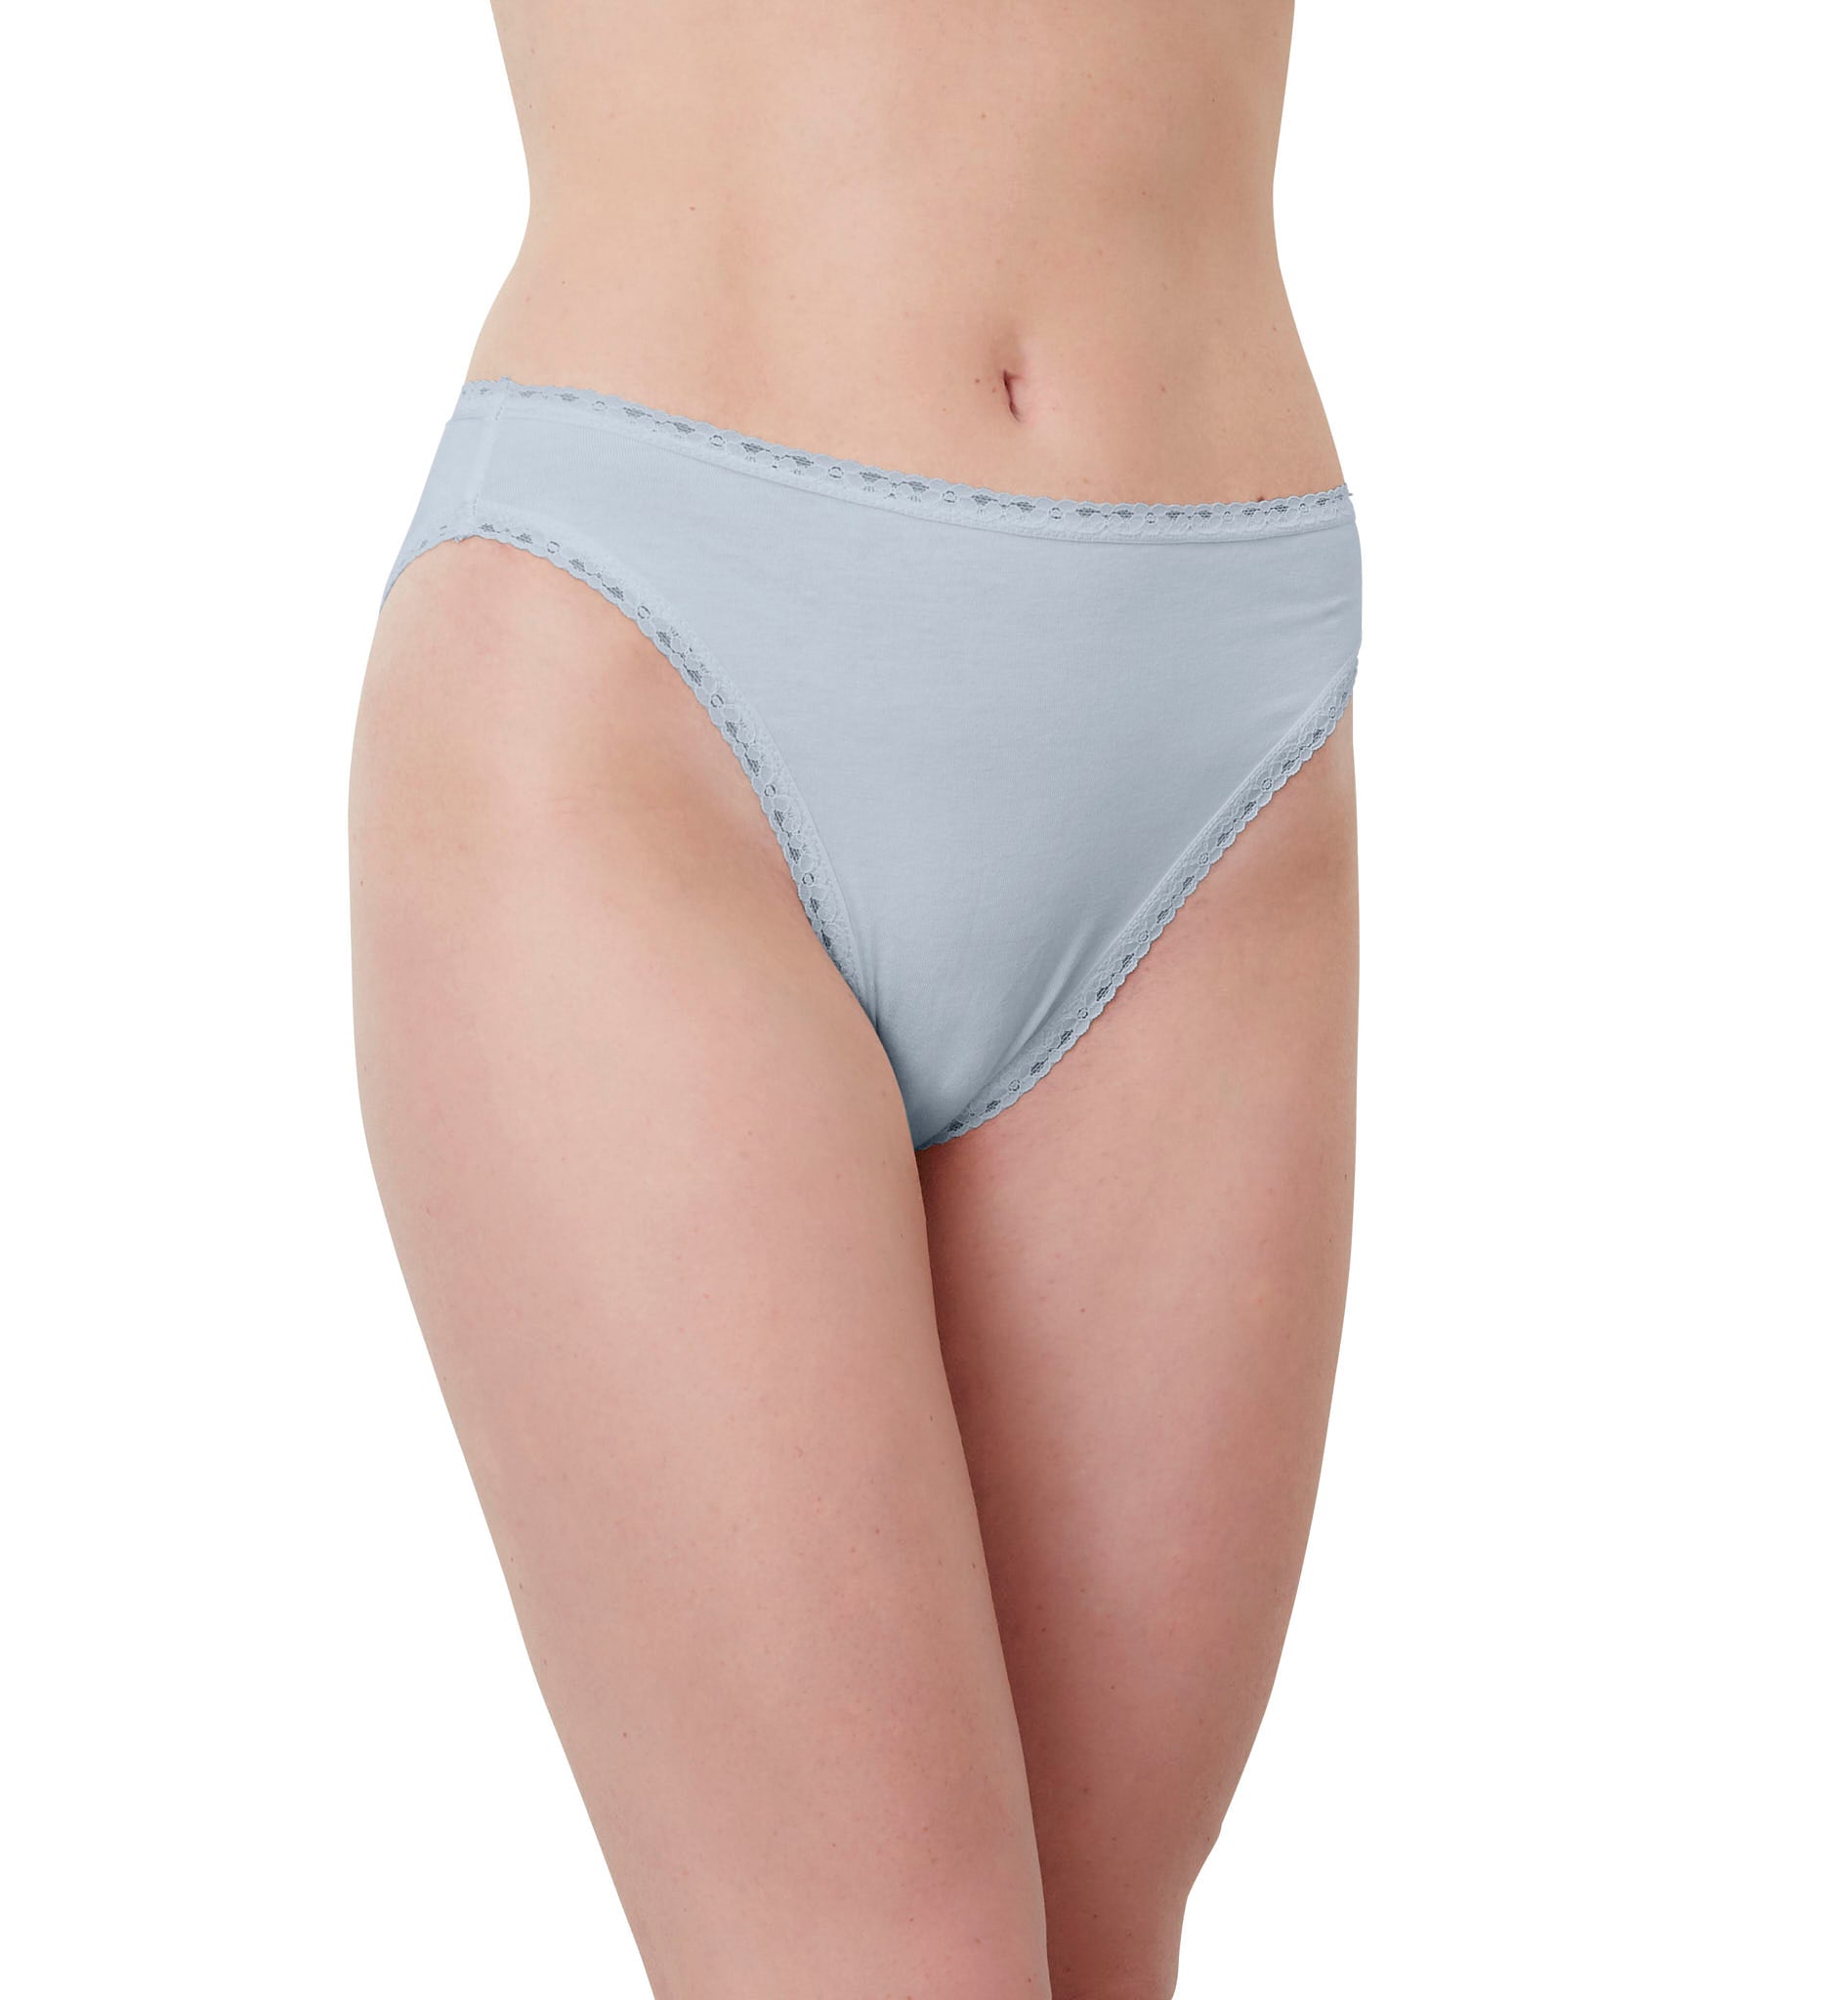 Blue 55 Women's Boyshort & Bikini Tanga underwear breathable cotton panties,  soft stretchy tag free Brief (3PK:1Black 1White 1H.Grey-Bikini/Tanga Large)  at  Women's Clothing store